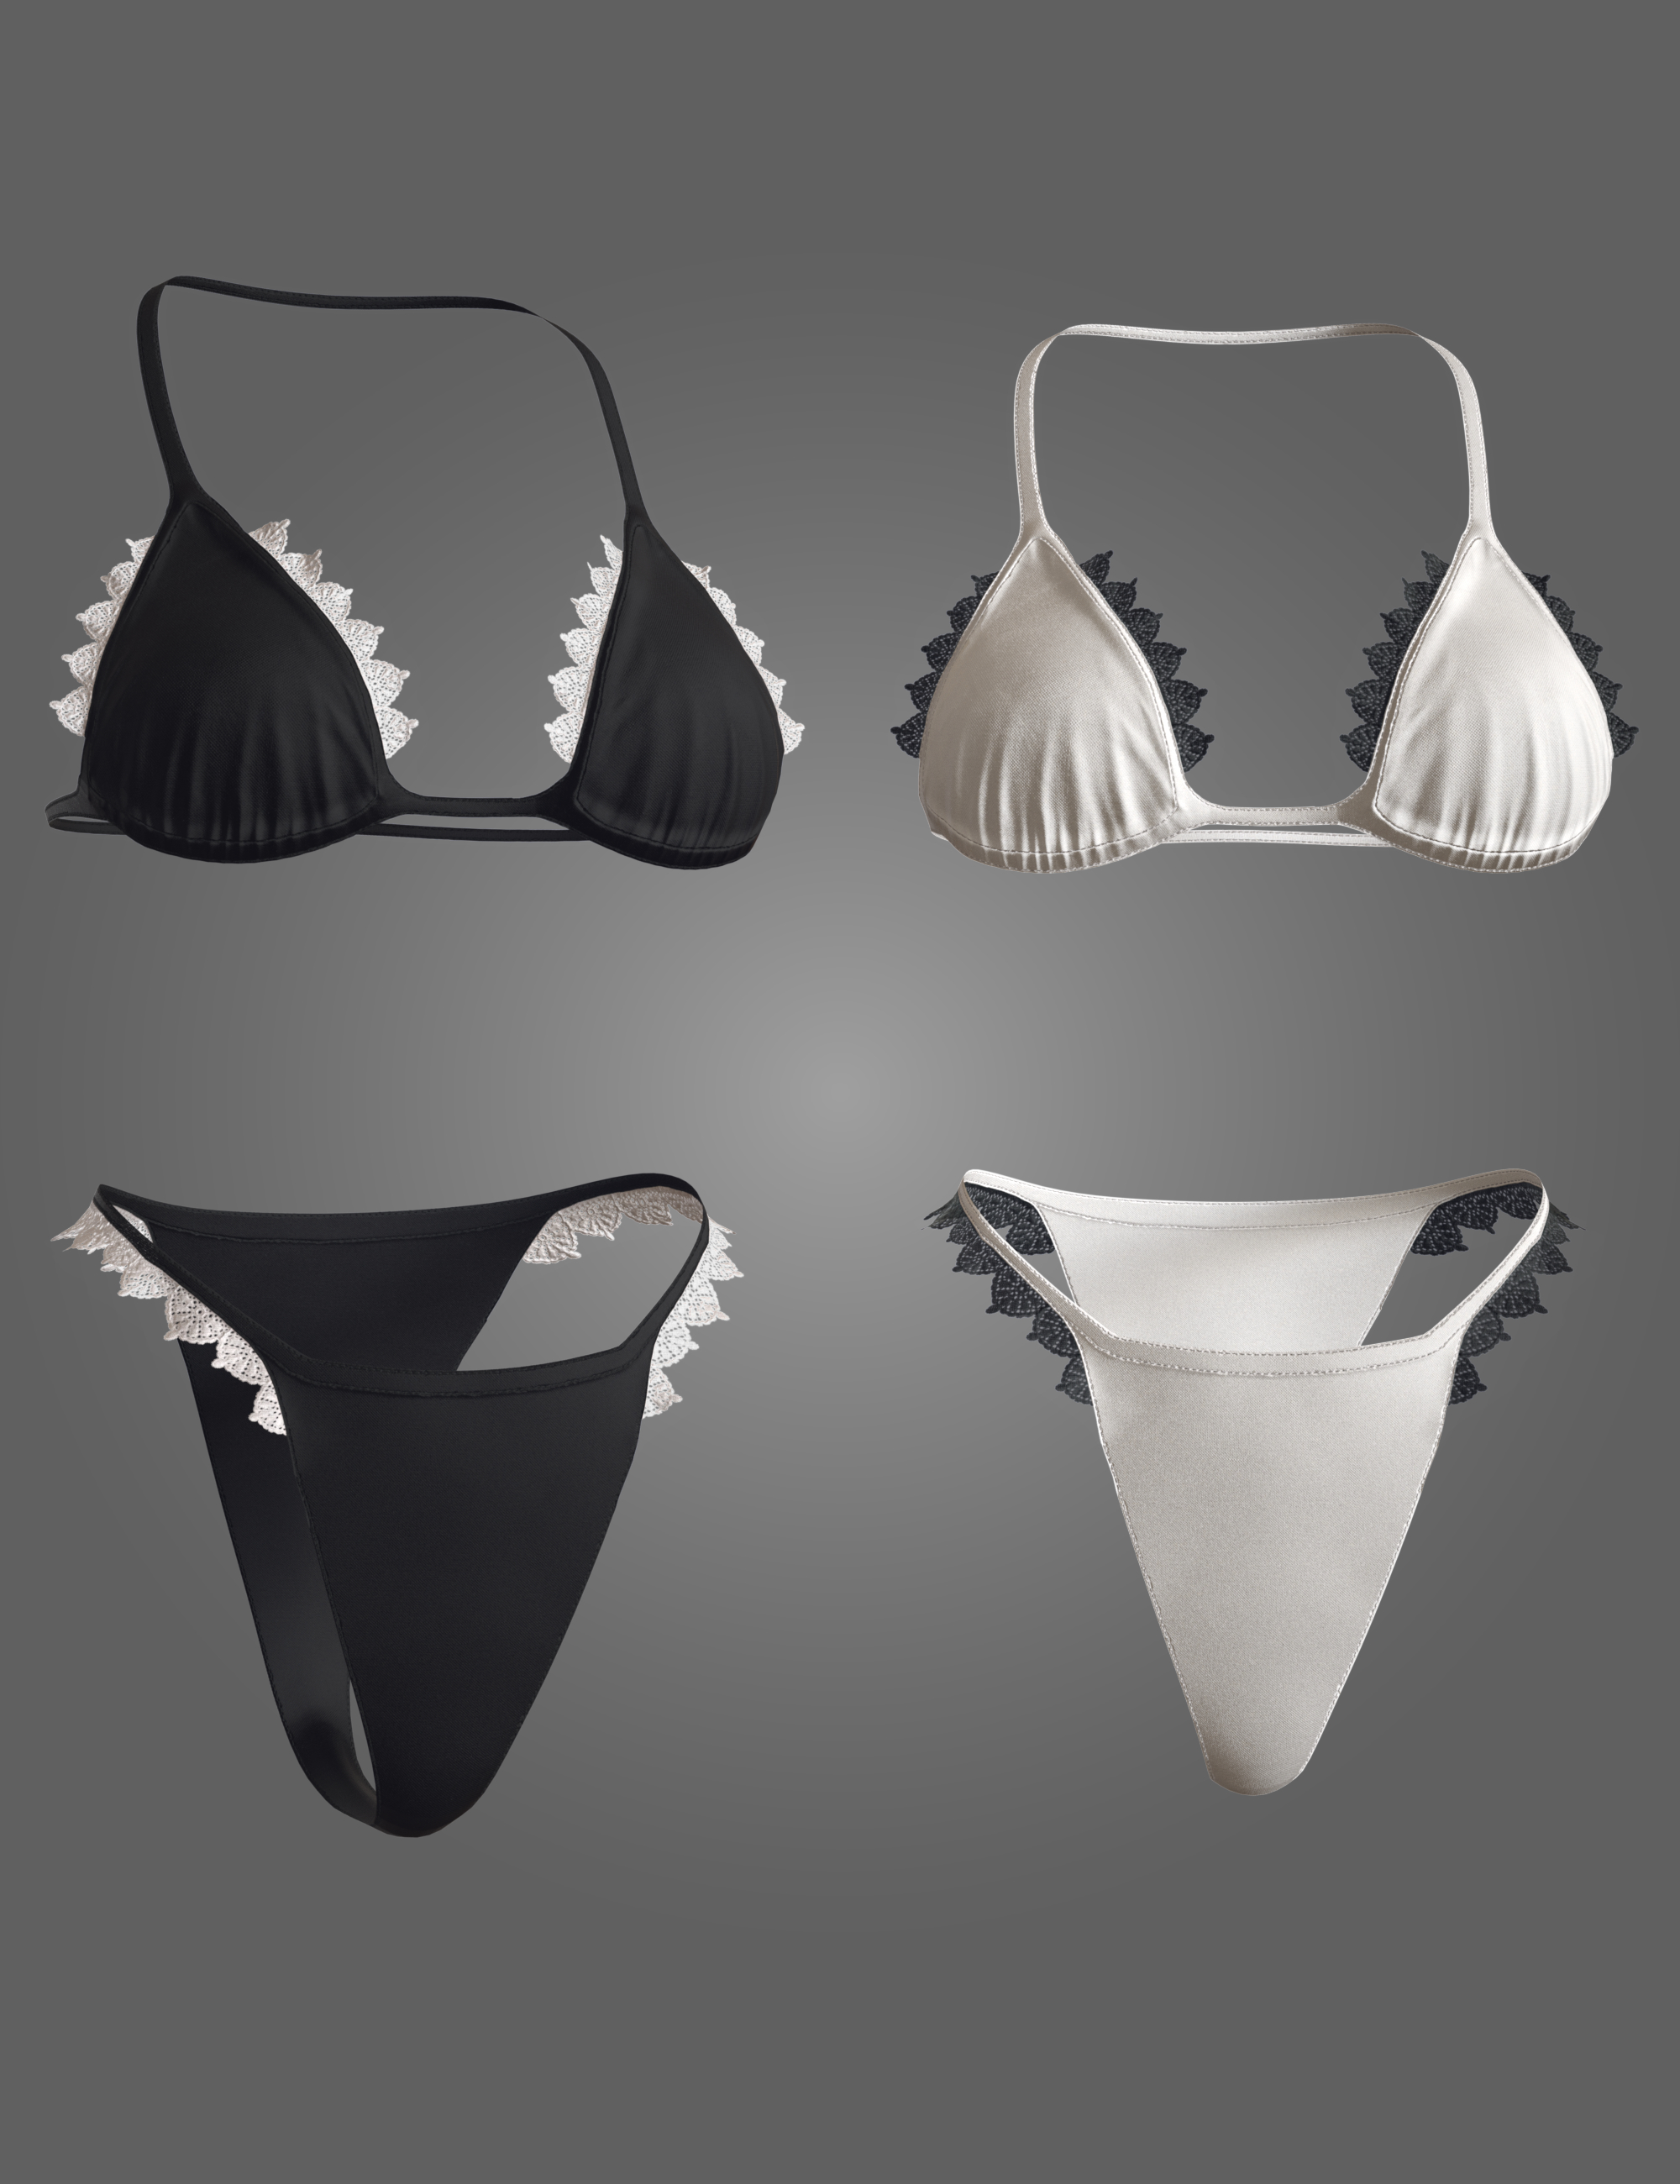 dForce Monochrome Bikini for Genesis 8 and 8.1 Females